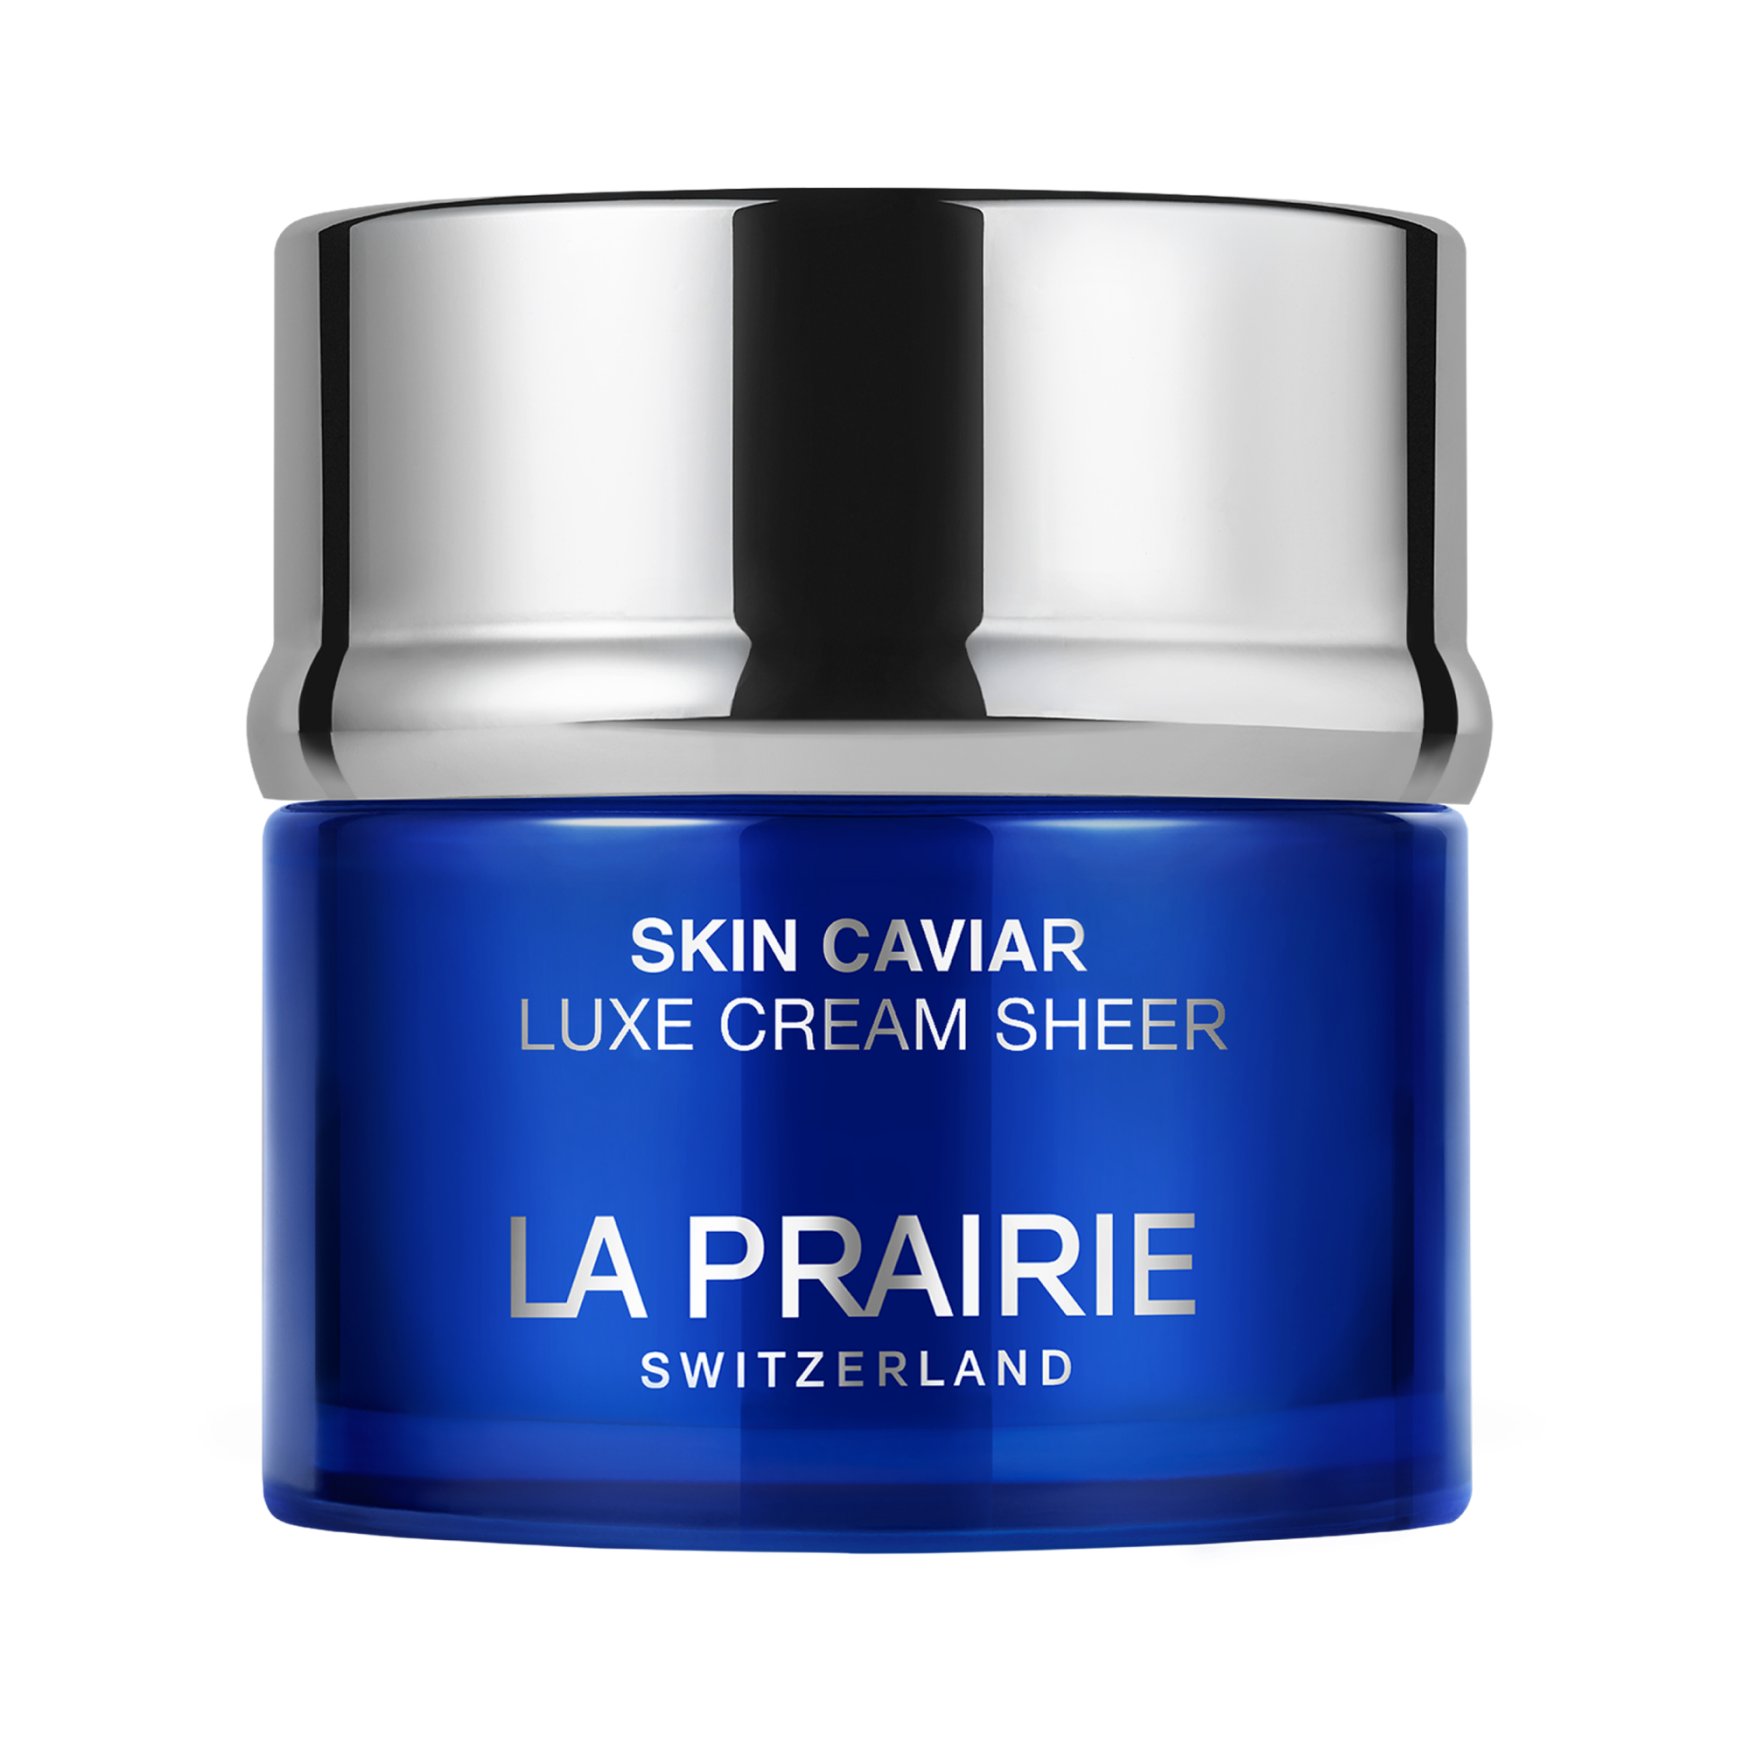 LA PRAIRIE Skin Caviar Luxe Cream Sheer | Space NK